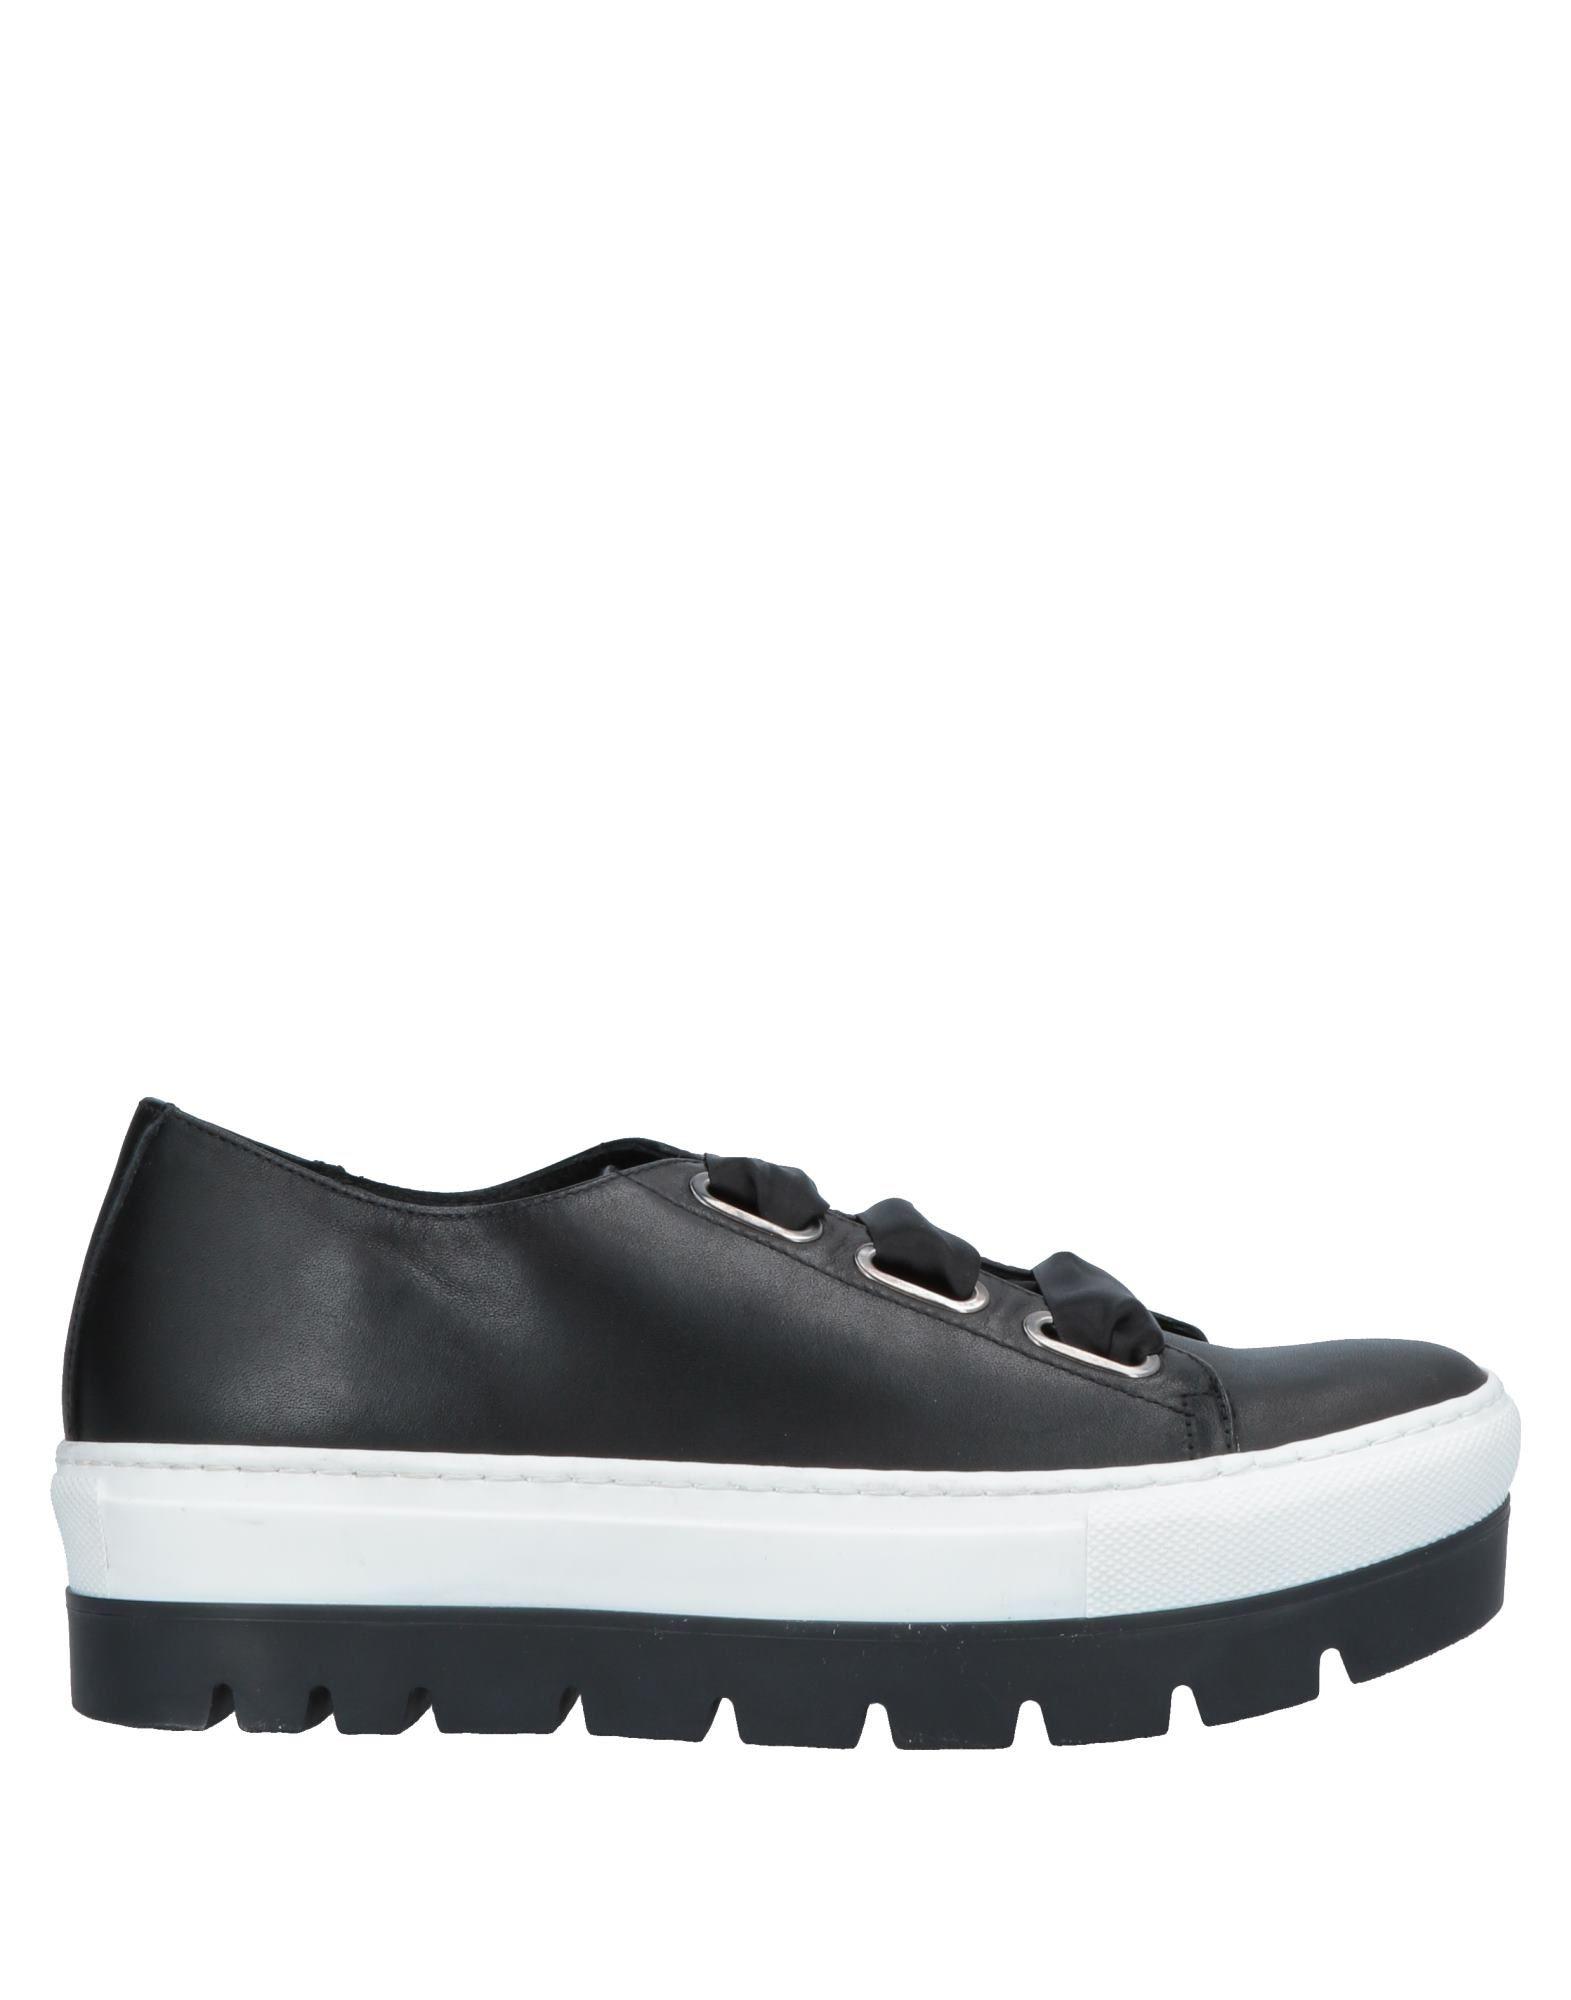 Stele Leather Low-tops & Sneakers in Black - Lyst